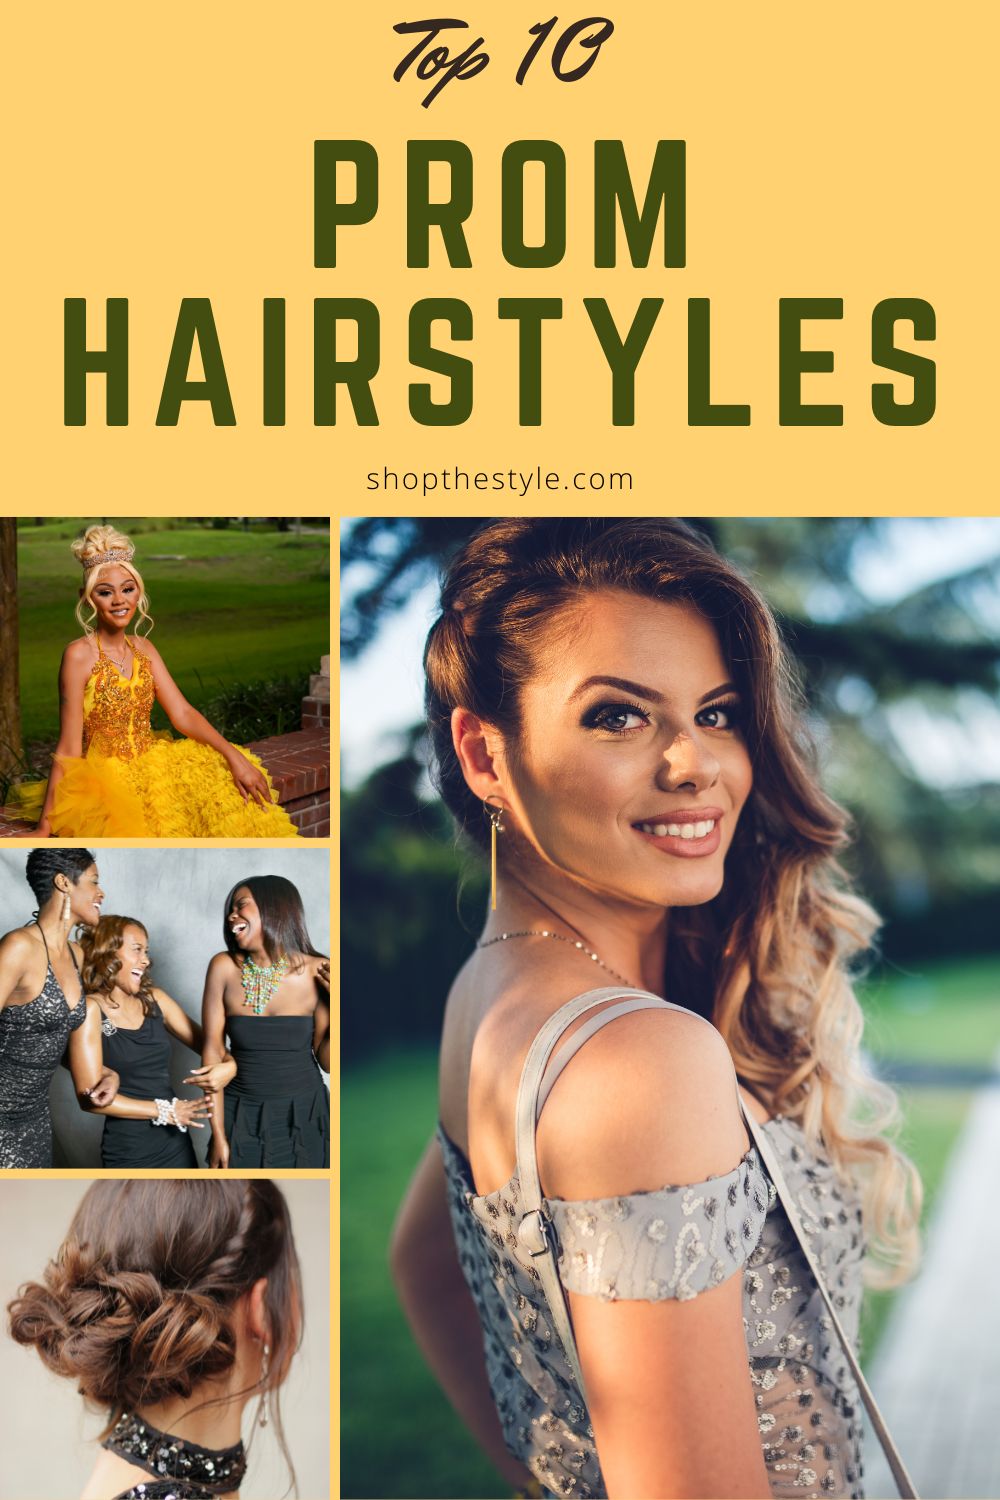 Hair Envy: Top 10 Prom Hairstyles